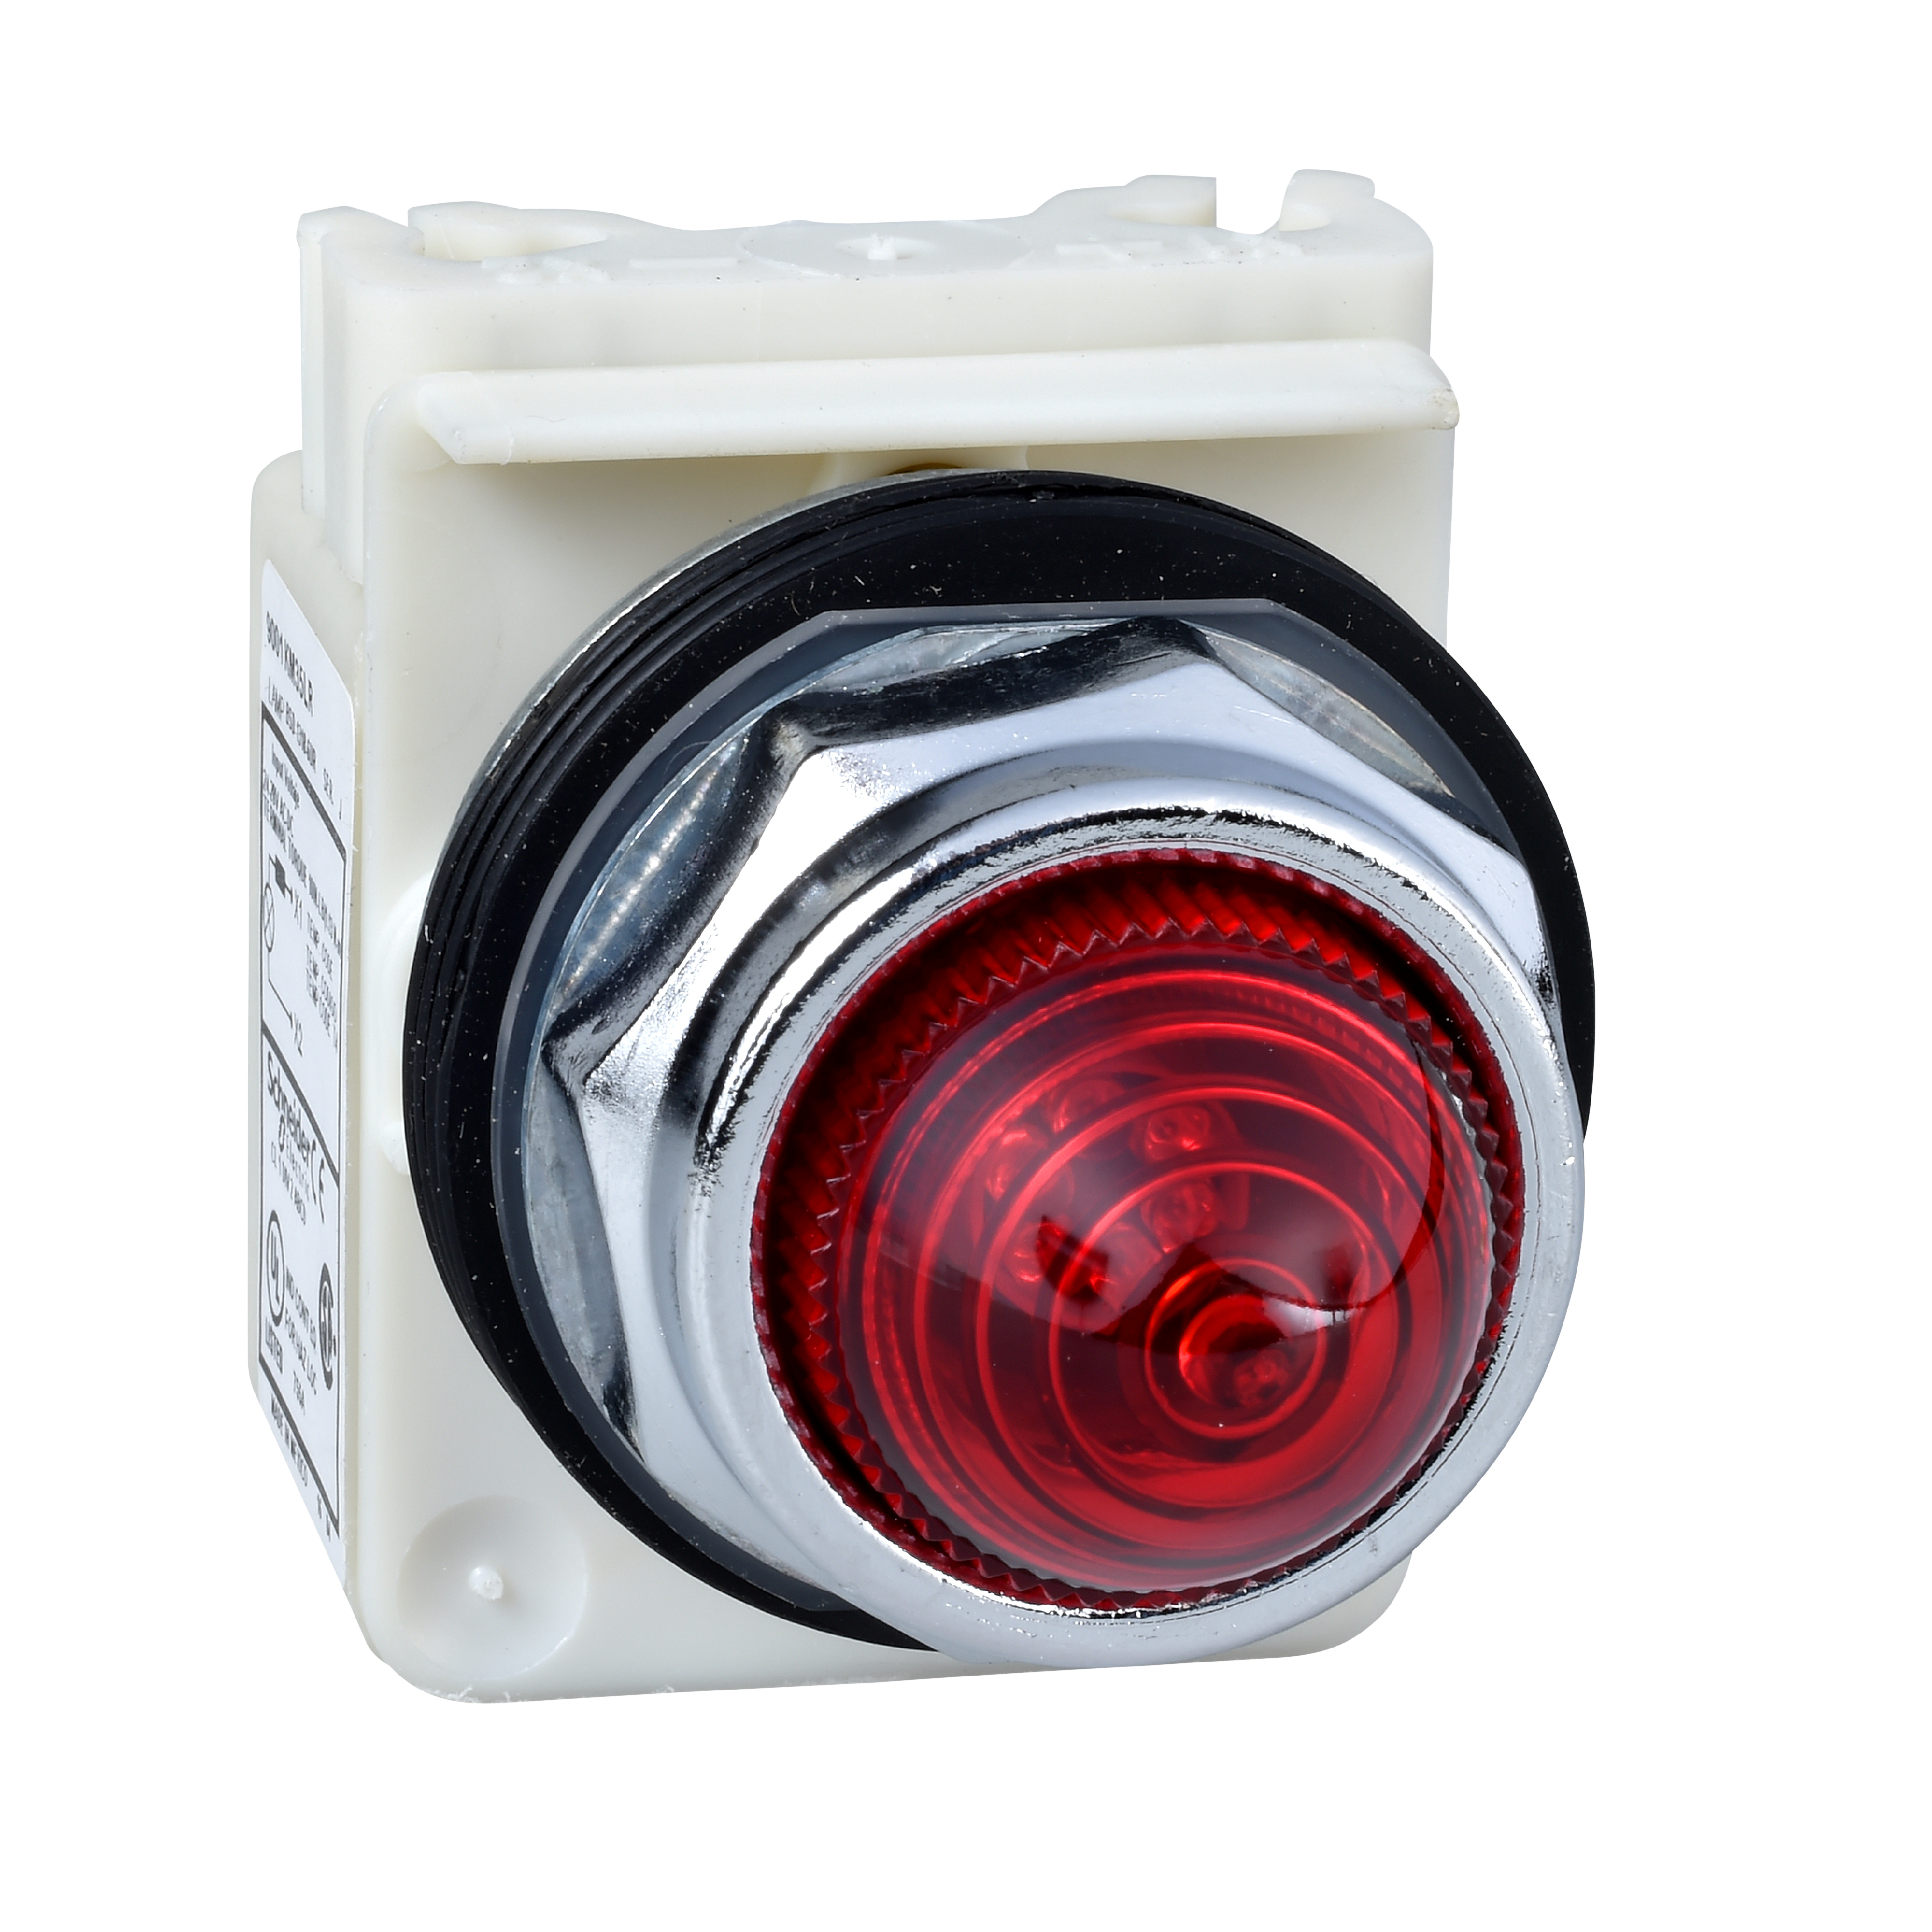 Pilot light, Harmony 9001K, metal, polycarbonate, domed, red, 30mm, 110-120V